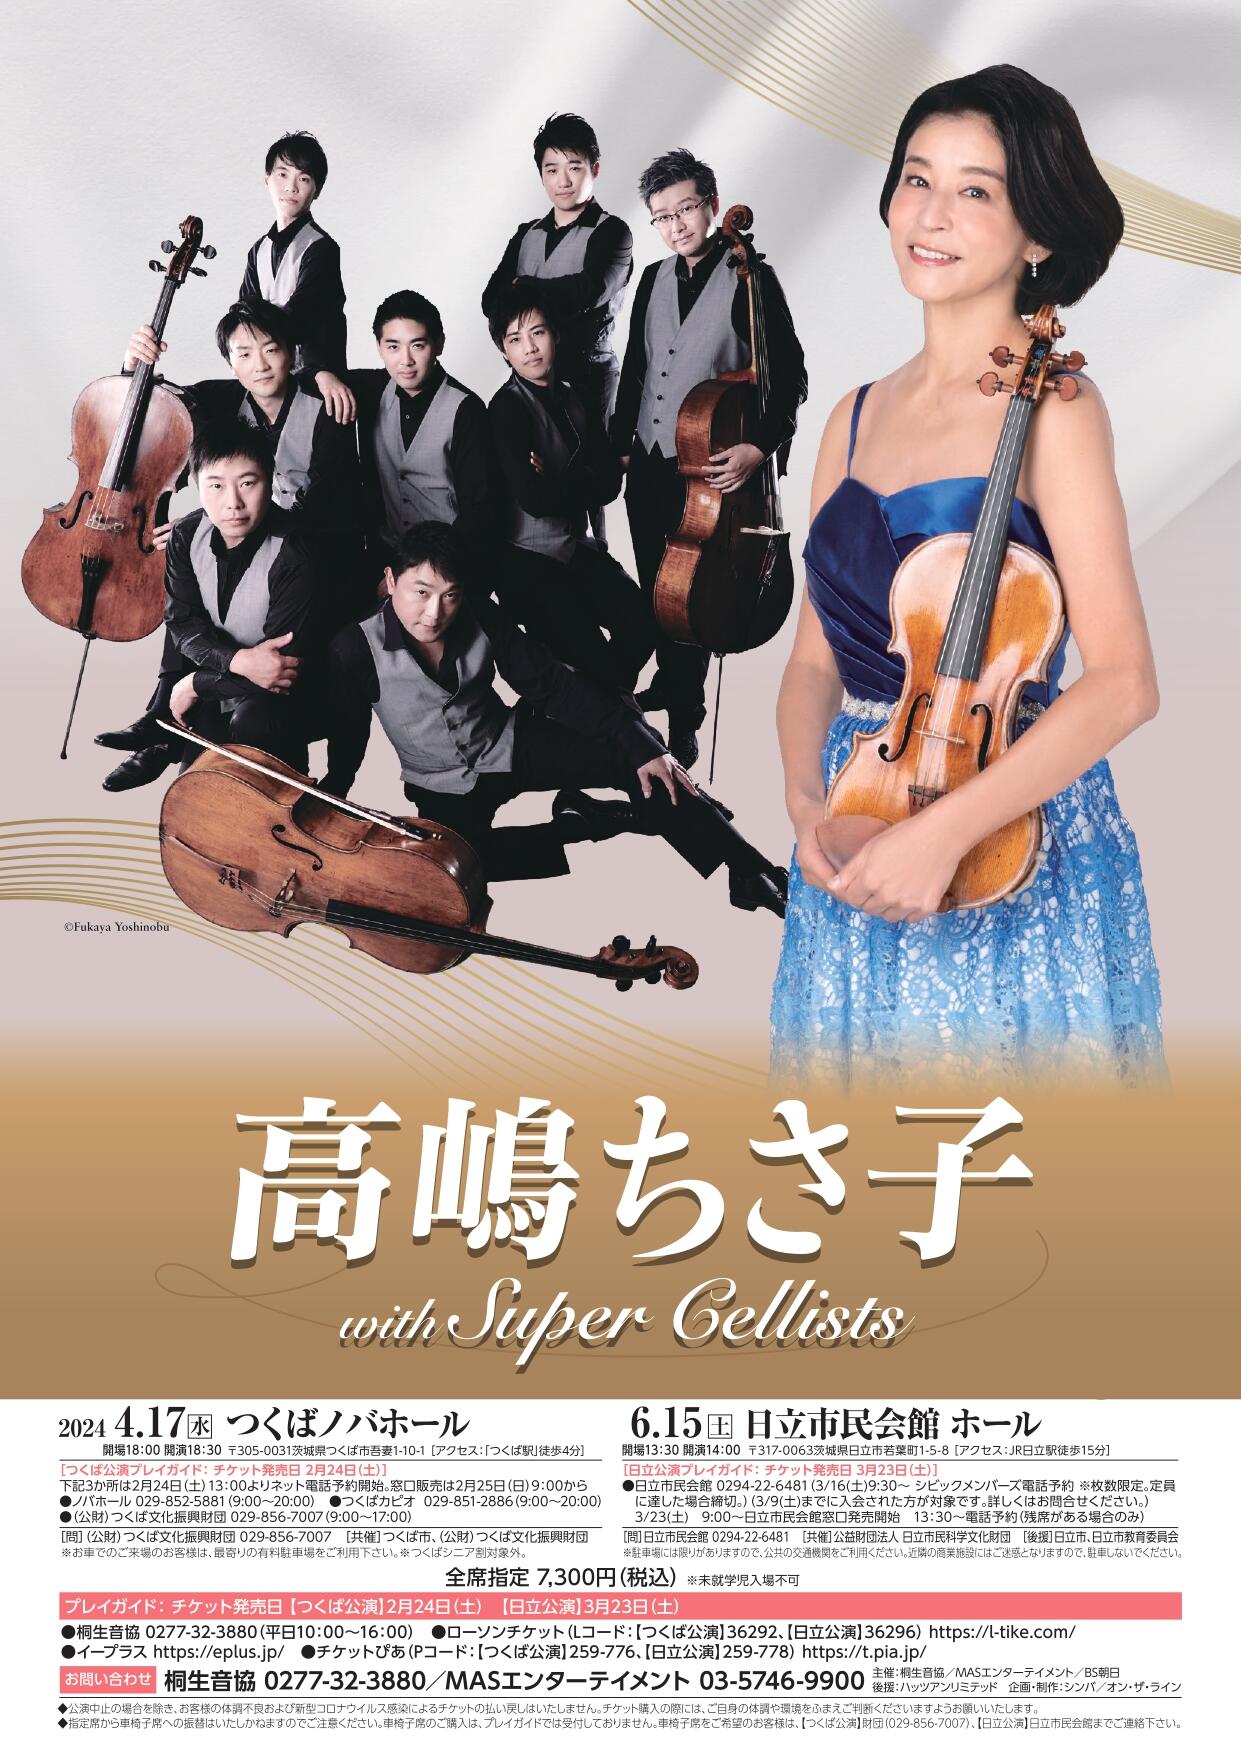 0417_chisako_takashima_with_Super_Cellists.jpg